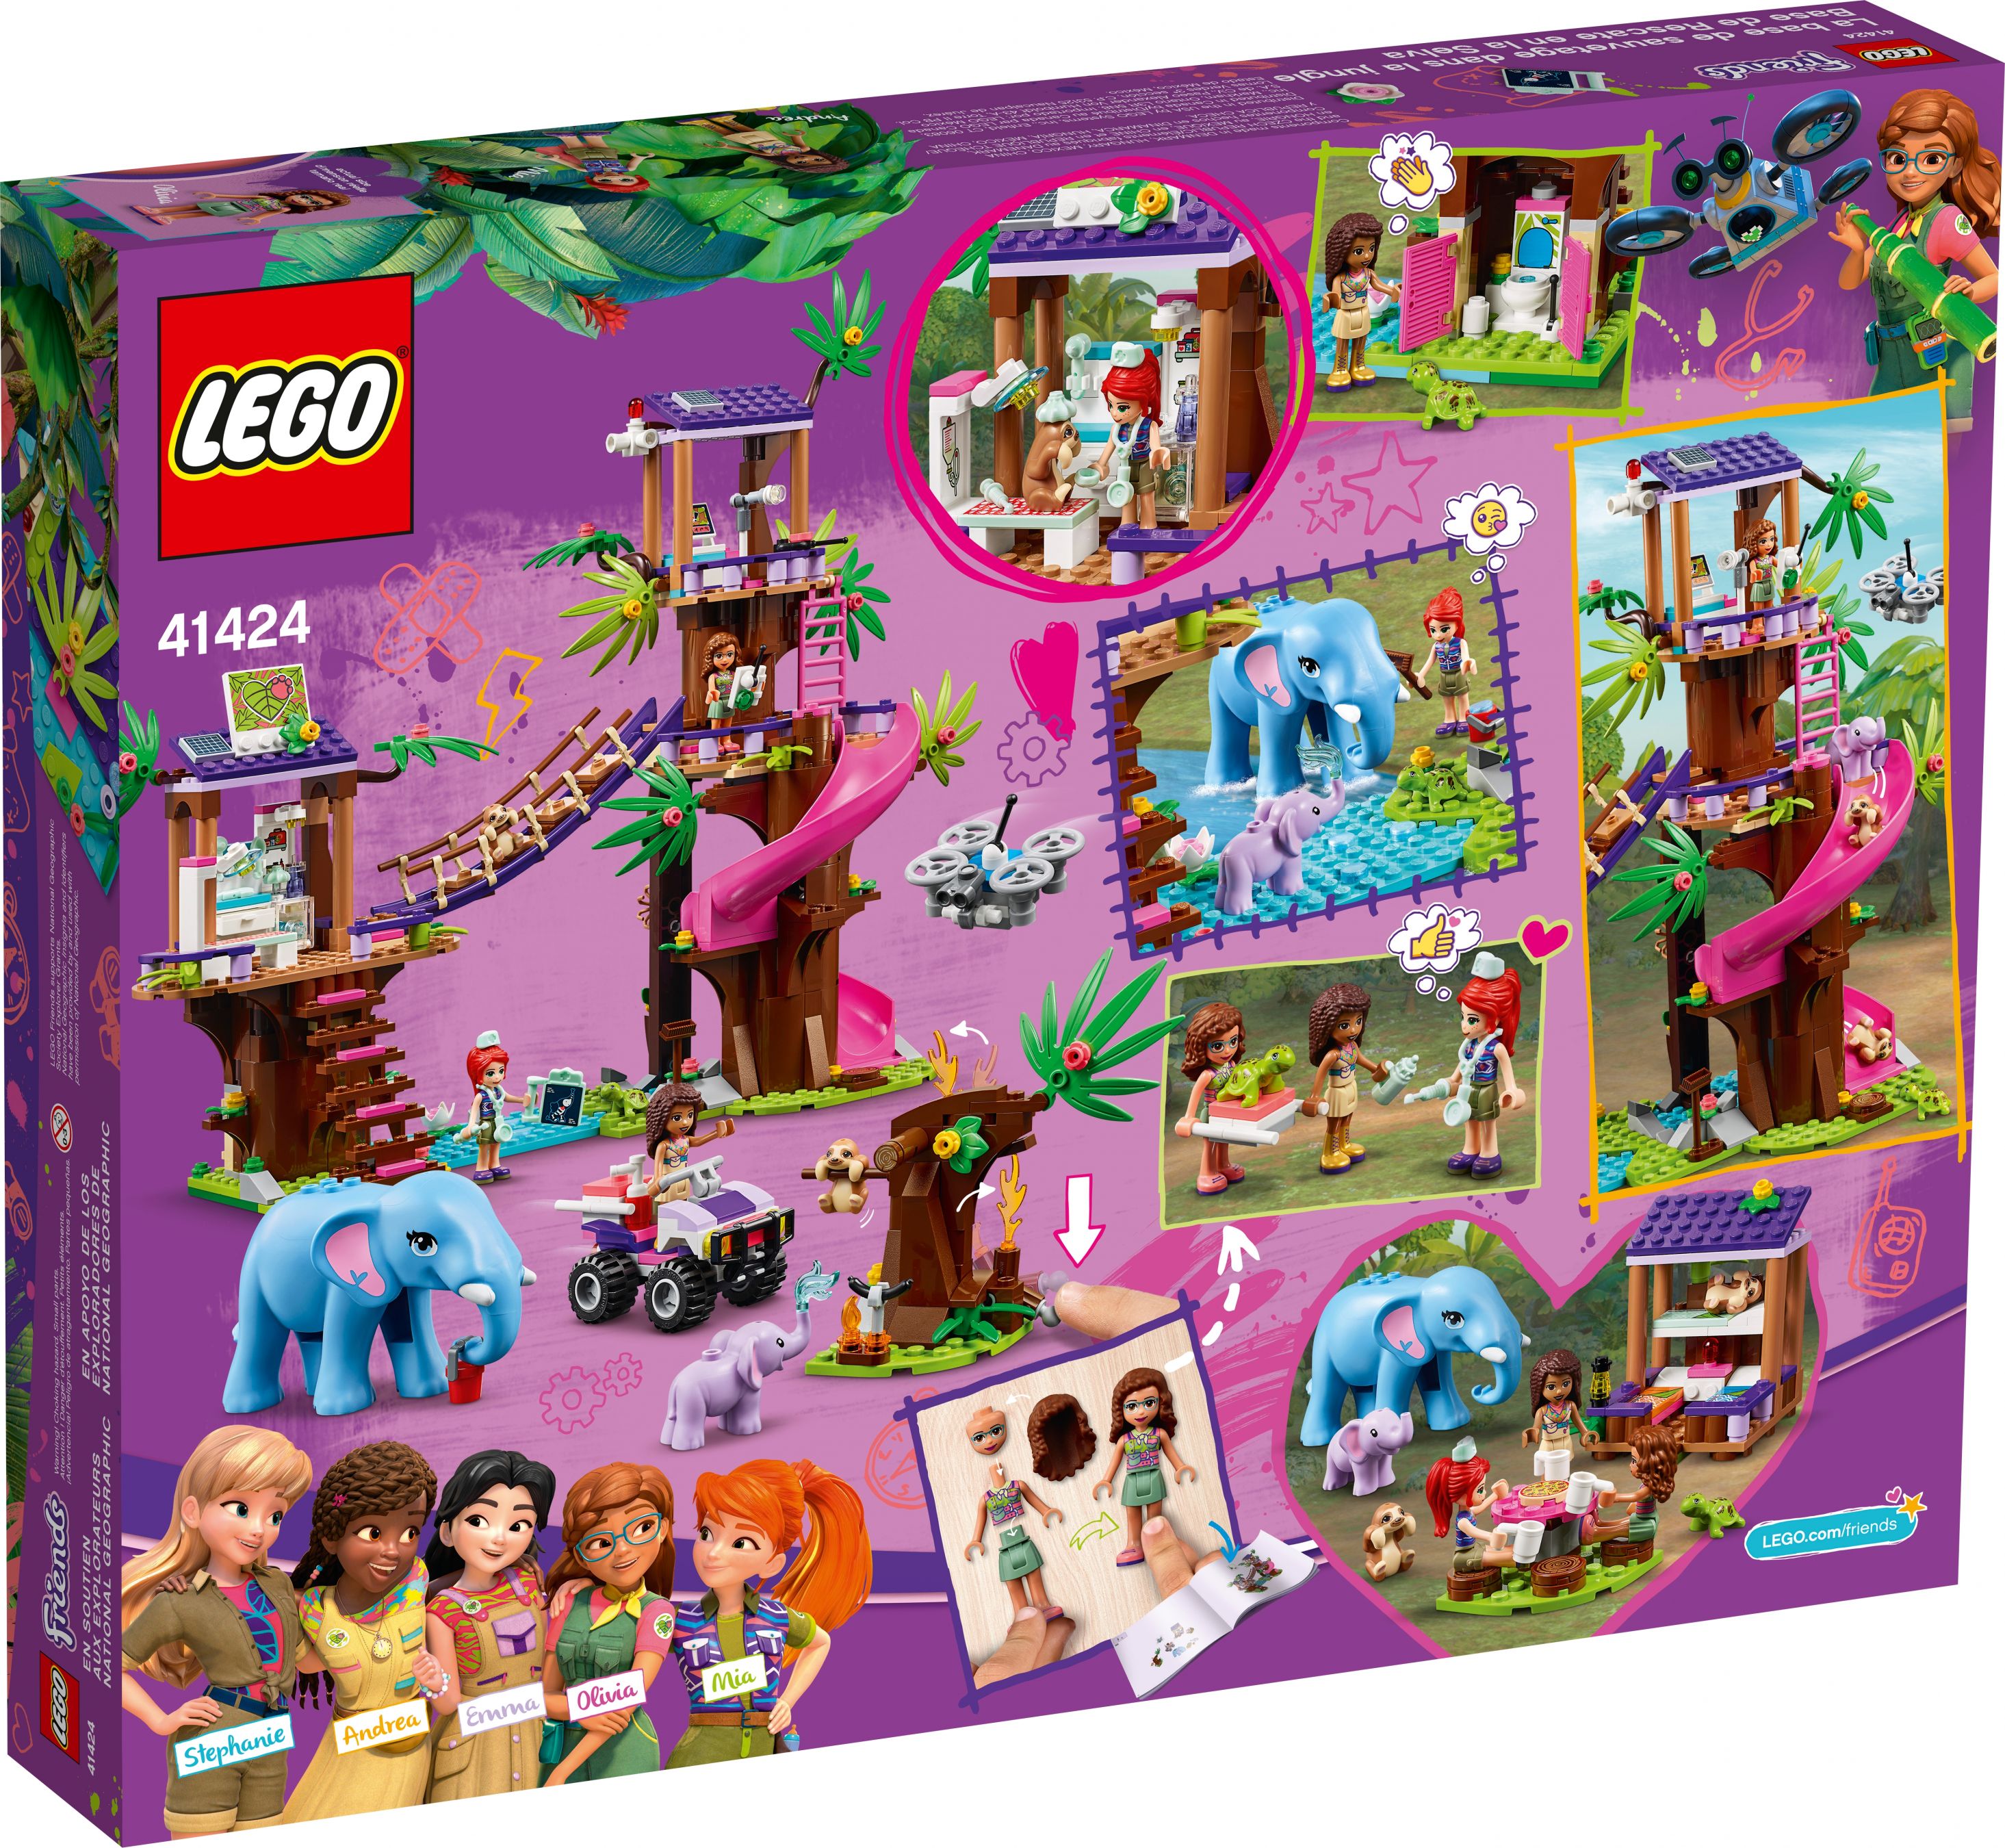 Brickfinder - LEGO Friends Summer 2020 Sets Full Lineup!